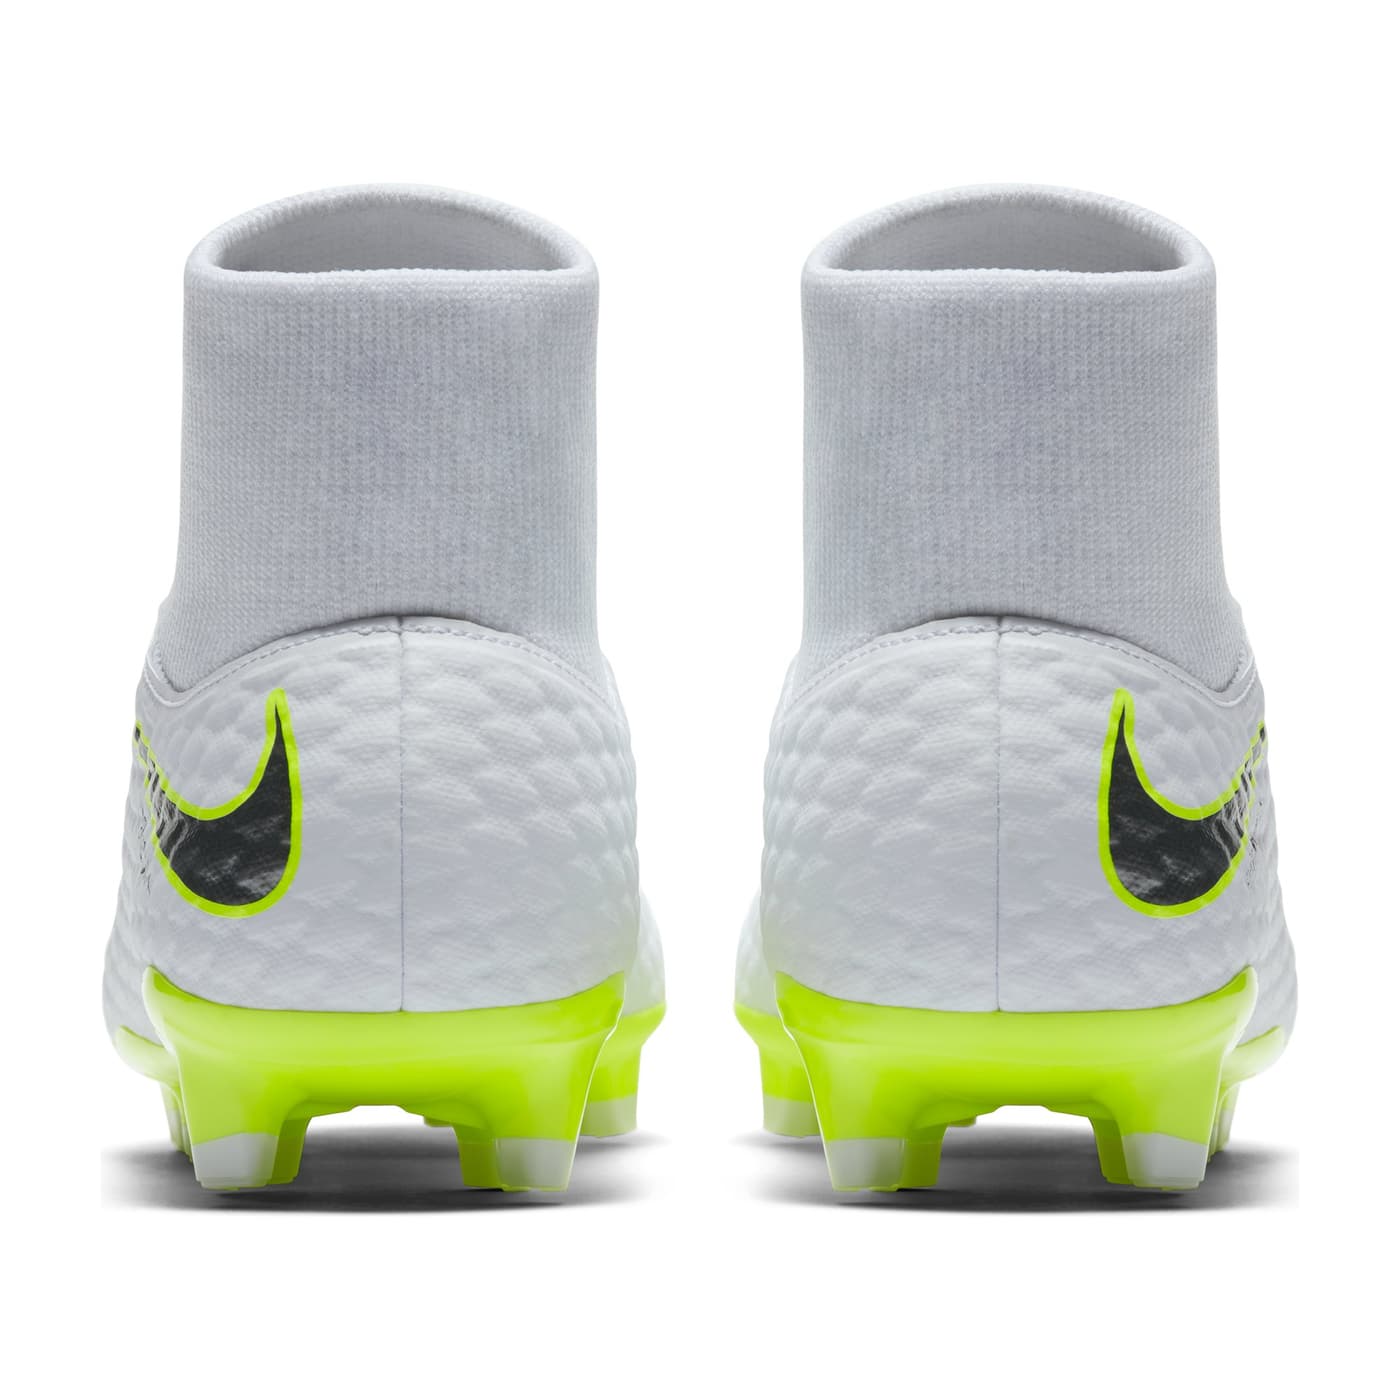 Luxury Nike HypervenomX Finale II IC Soccer Shoes Photo